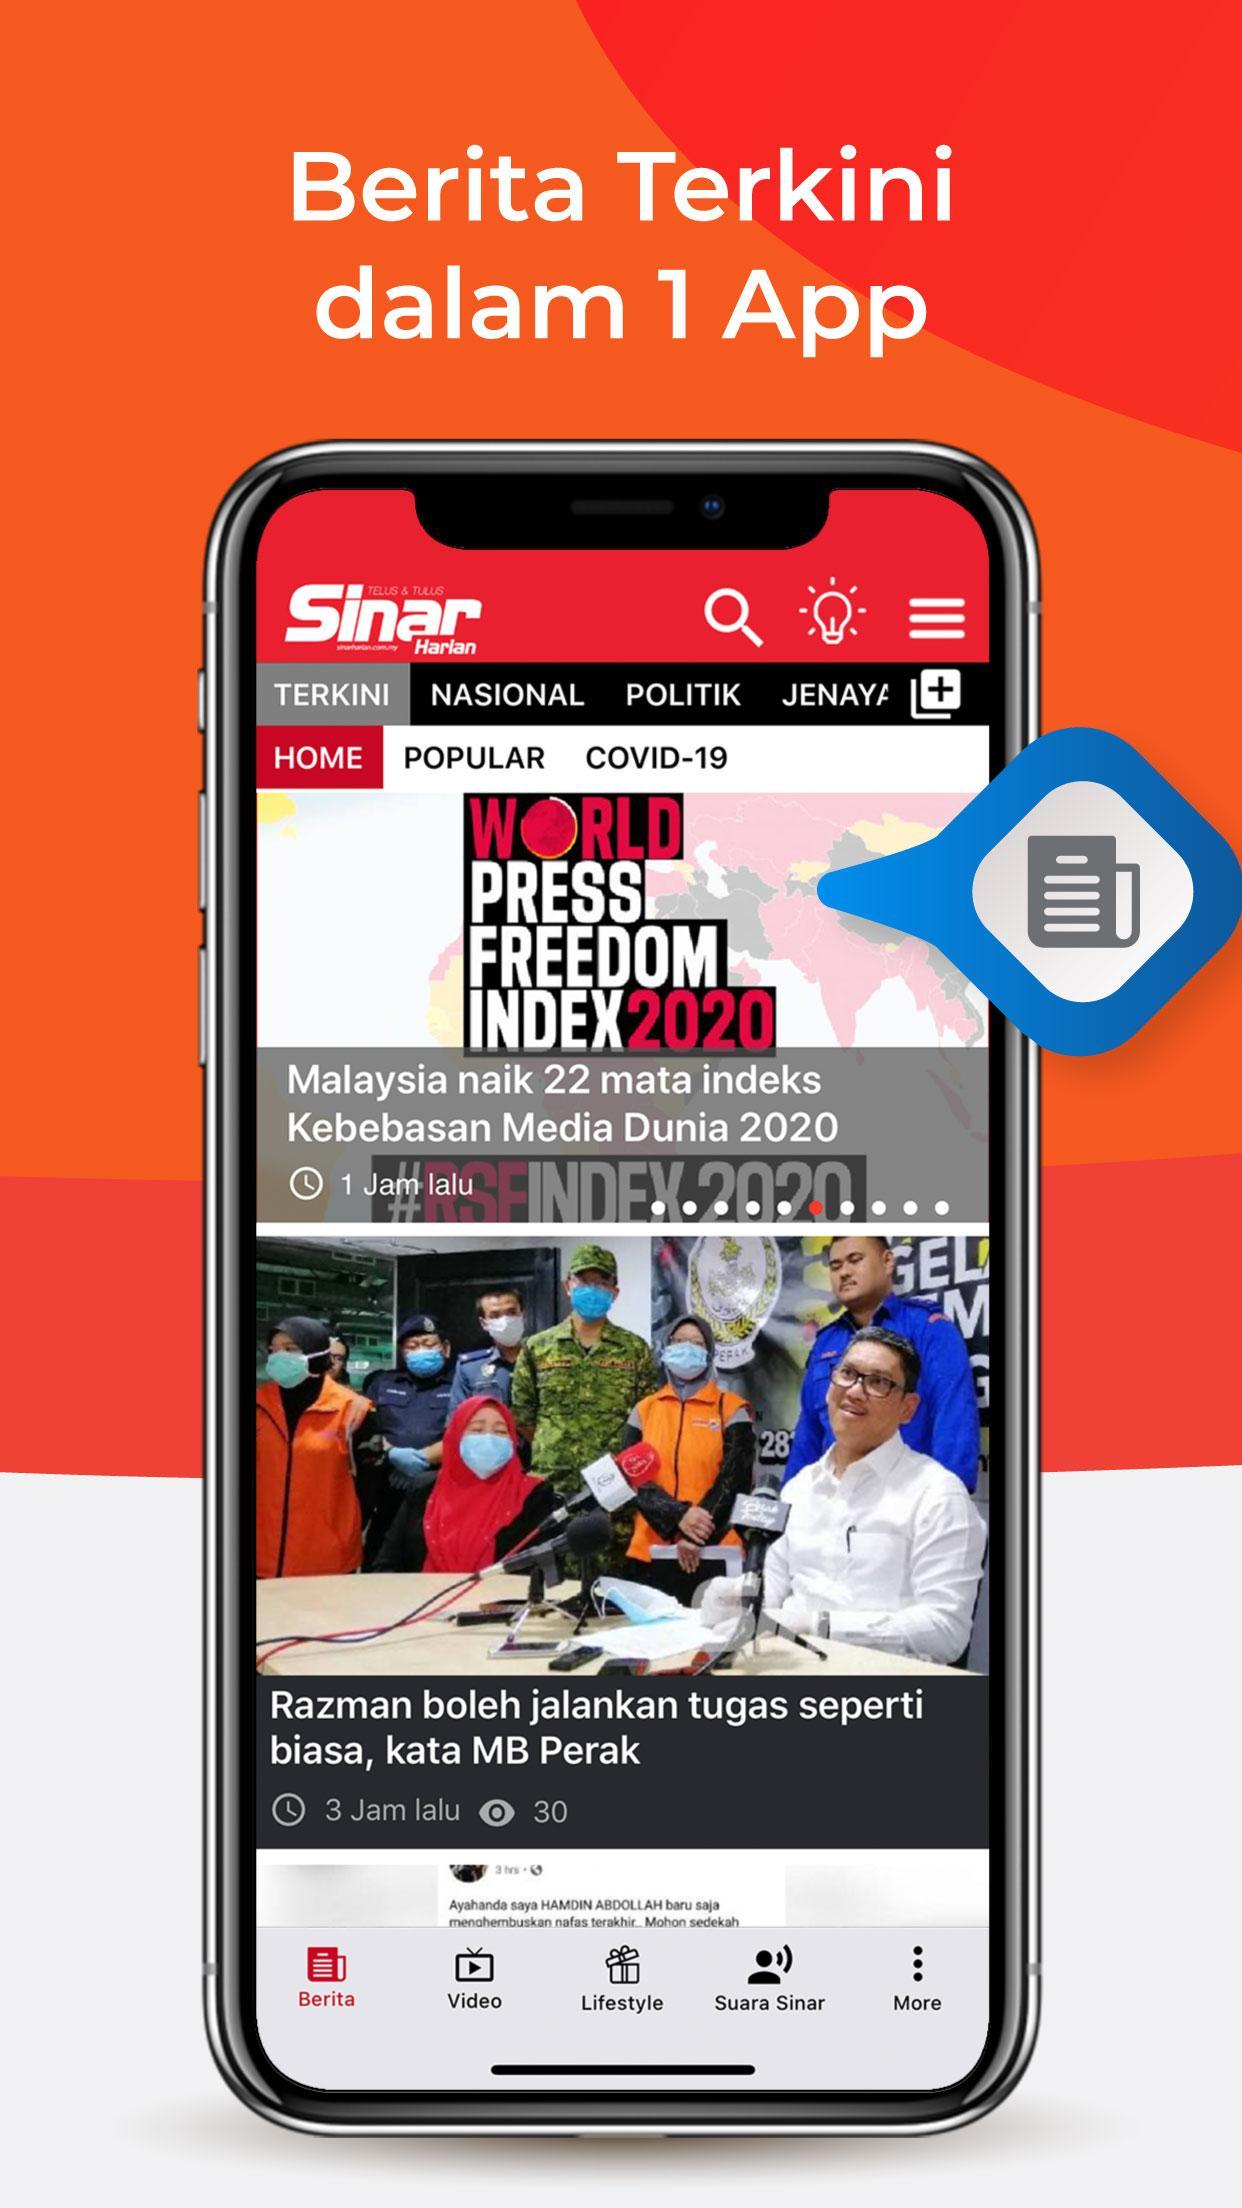 Sinar Harian Online Politik / Sinar Harian for Android - APK Download / Sinar harian, shah alam, malaysia.